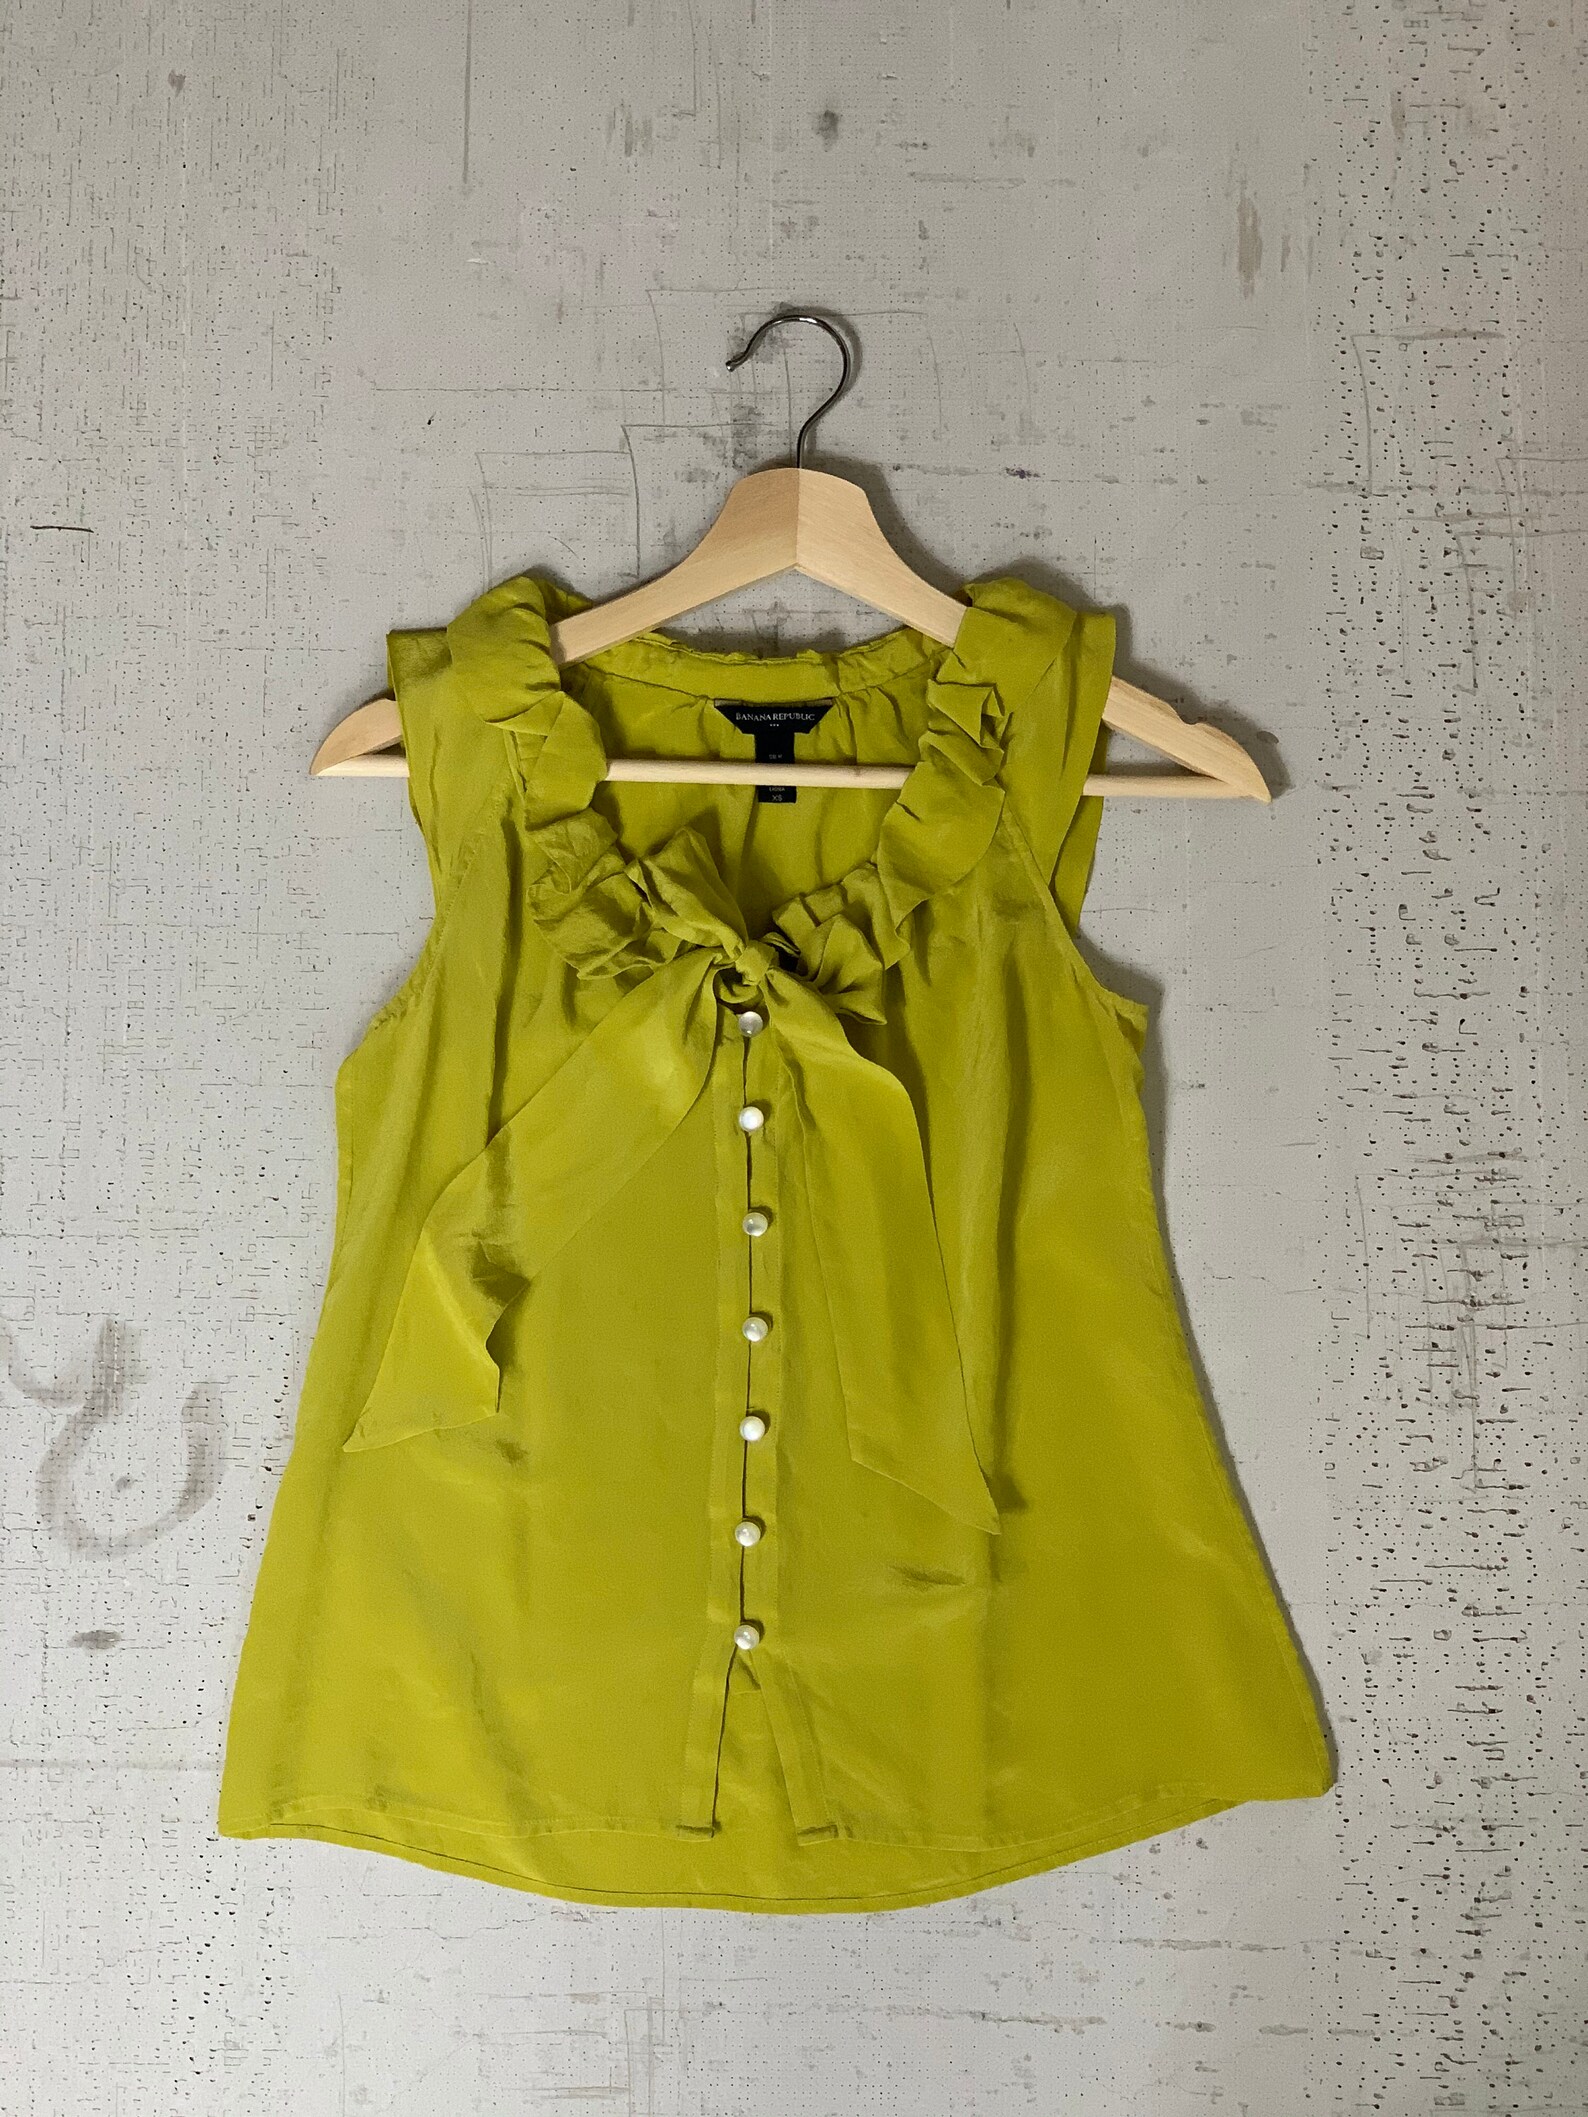 Silk Sleeveless blouse lime green Silk bottom up t-shirt. | Etsy